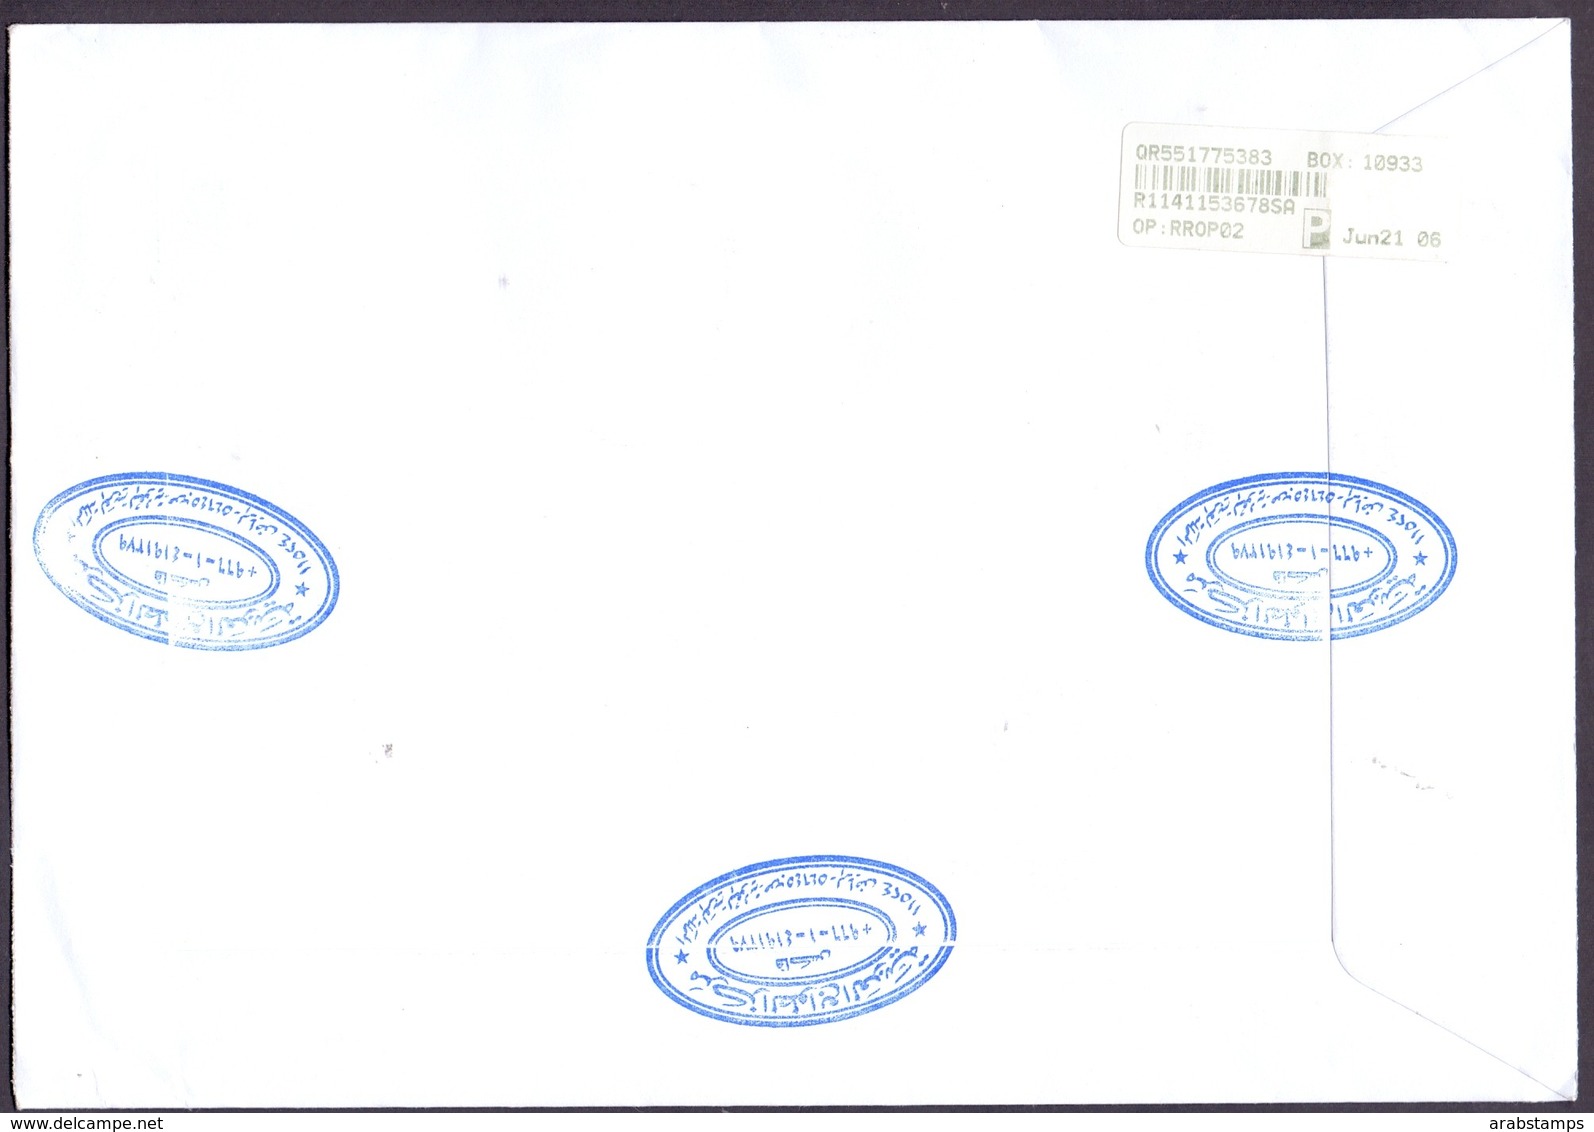 SAUDI ARABIA Registered Mail Cover Complete Set 2 Pair Stamps + Souvenir Sheets Sent To Qatar - Saudi Arabia